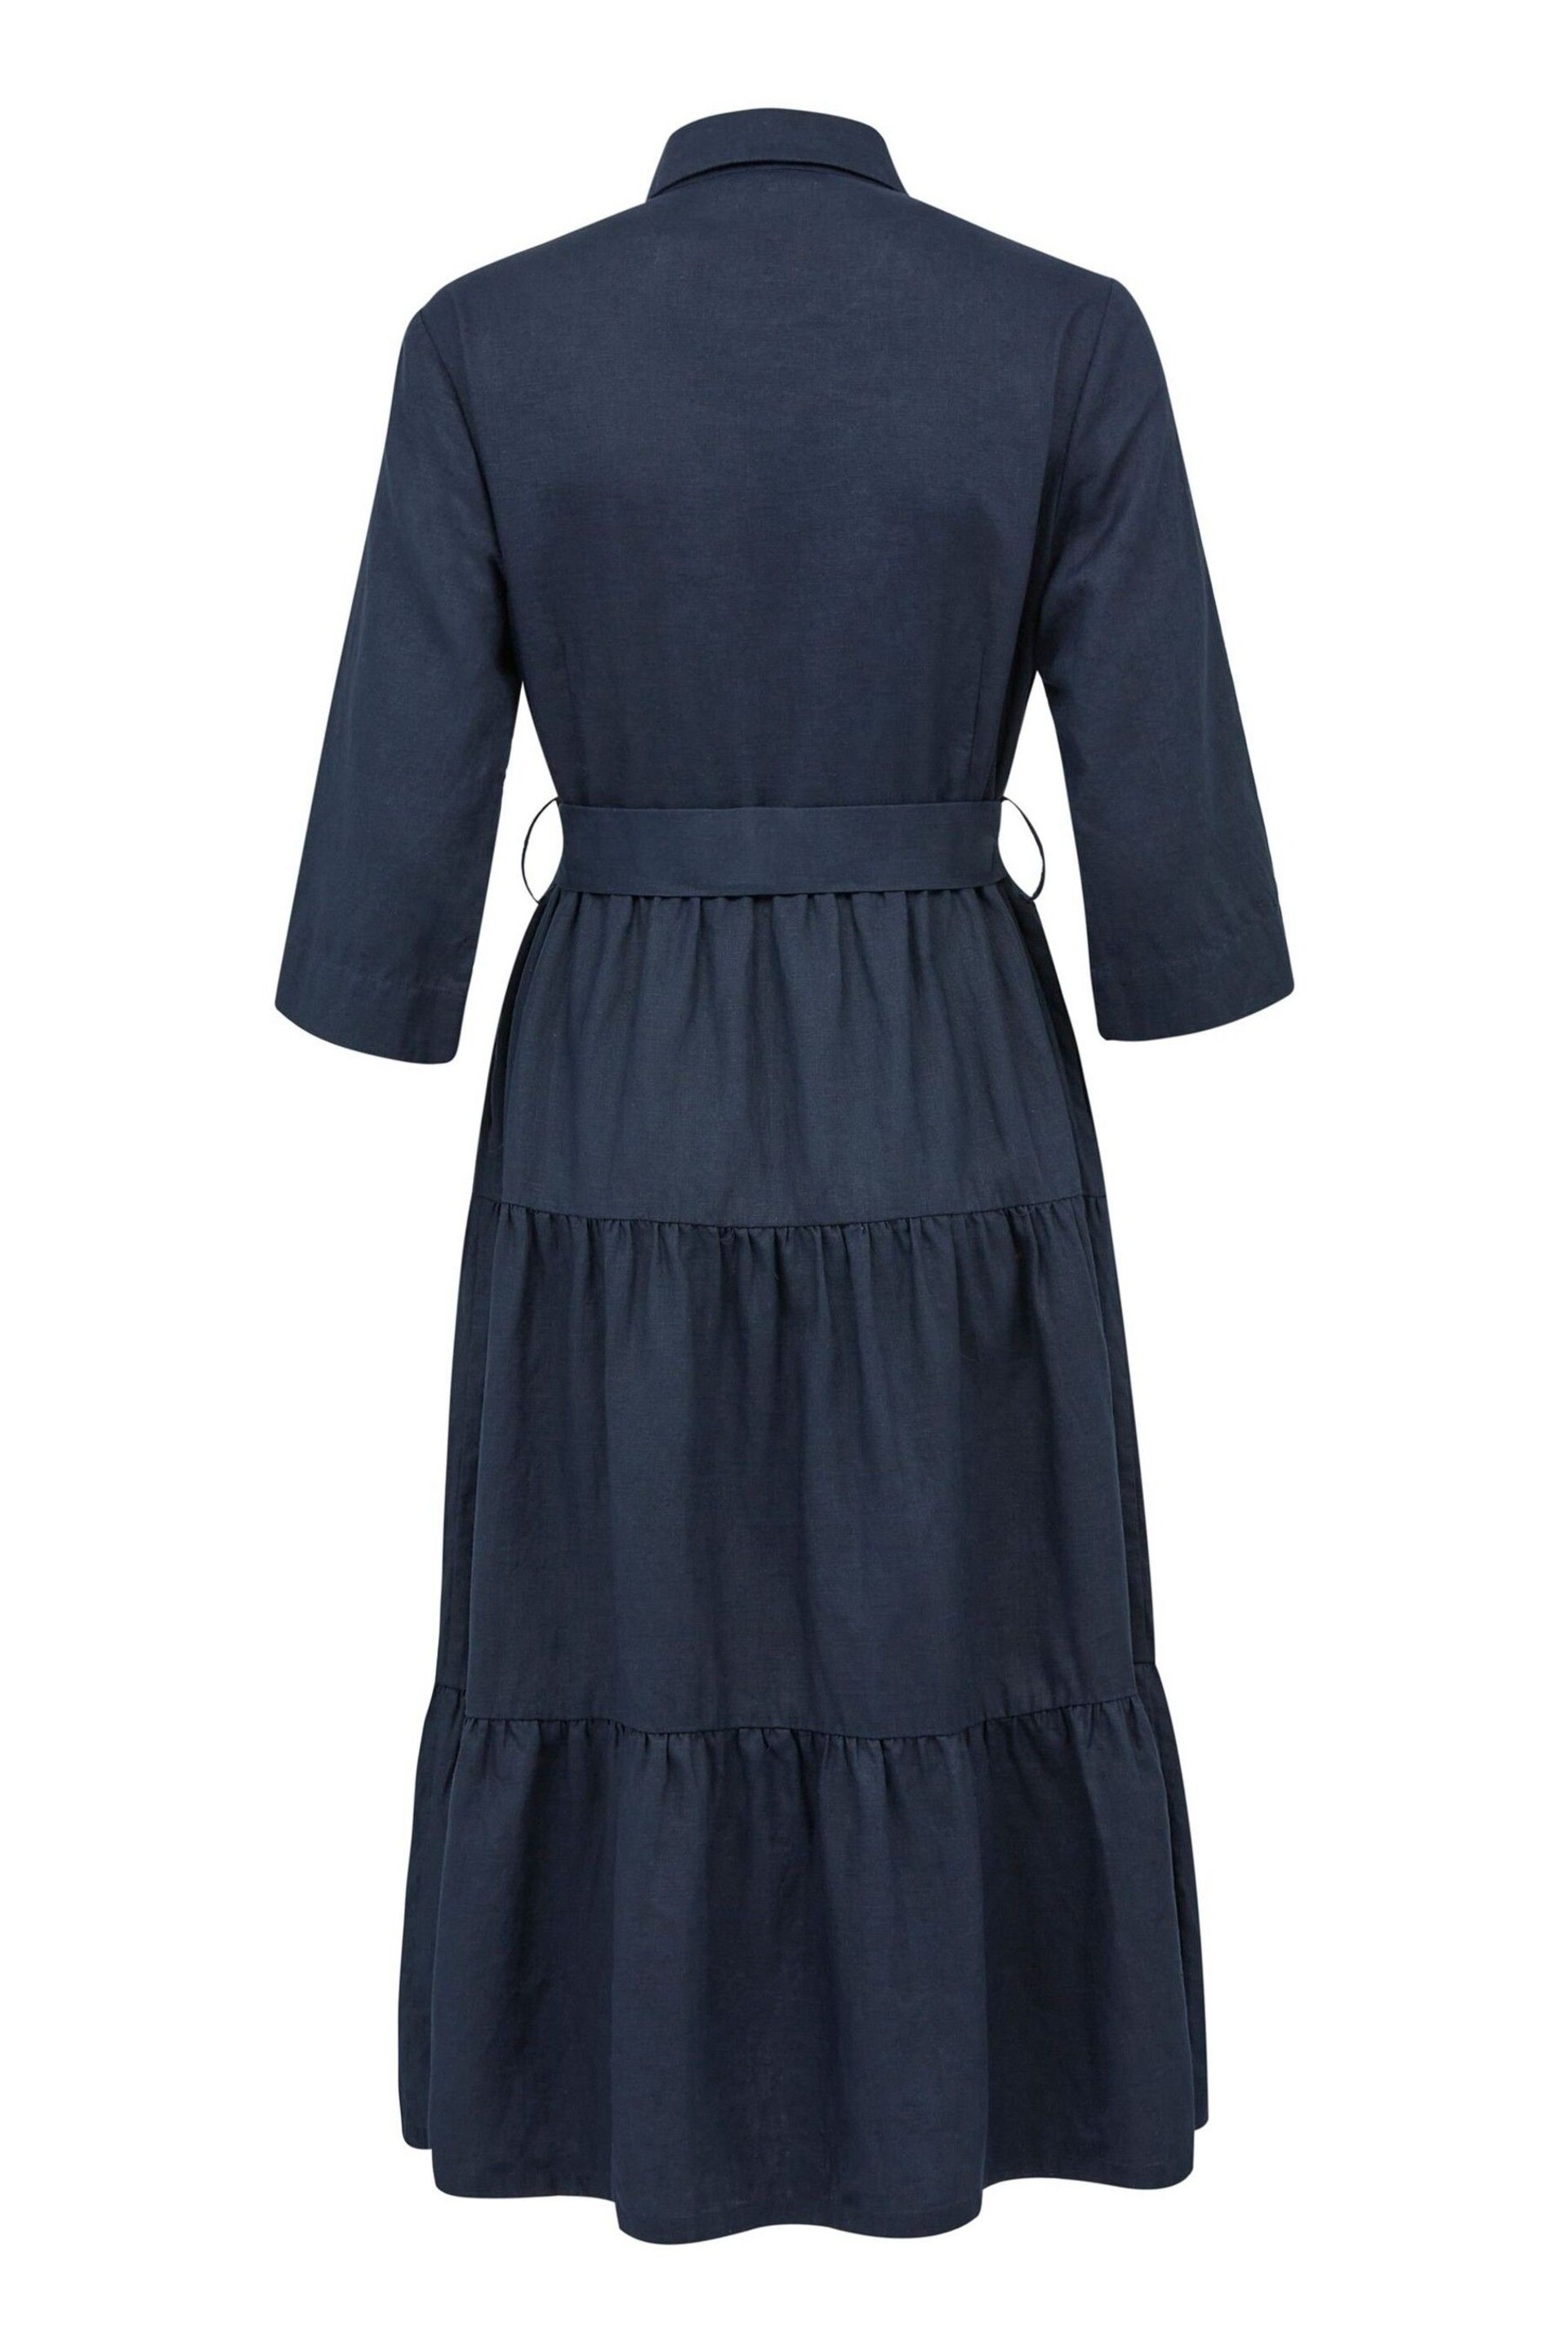 Celtic & Co. Blue Linen Tiered Midi Dresses - Image 3 of 7